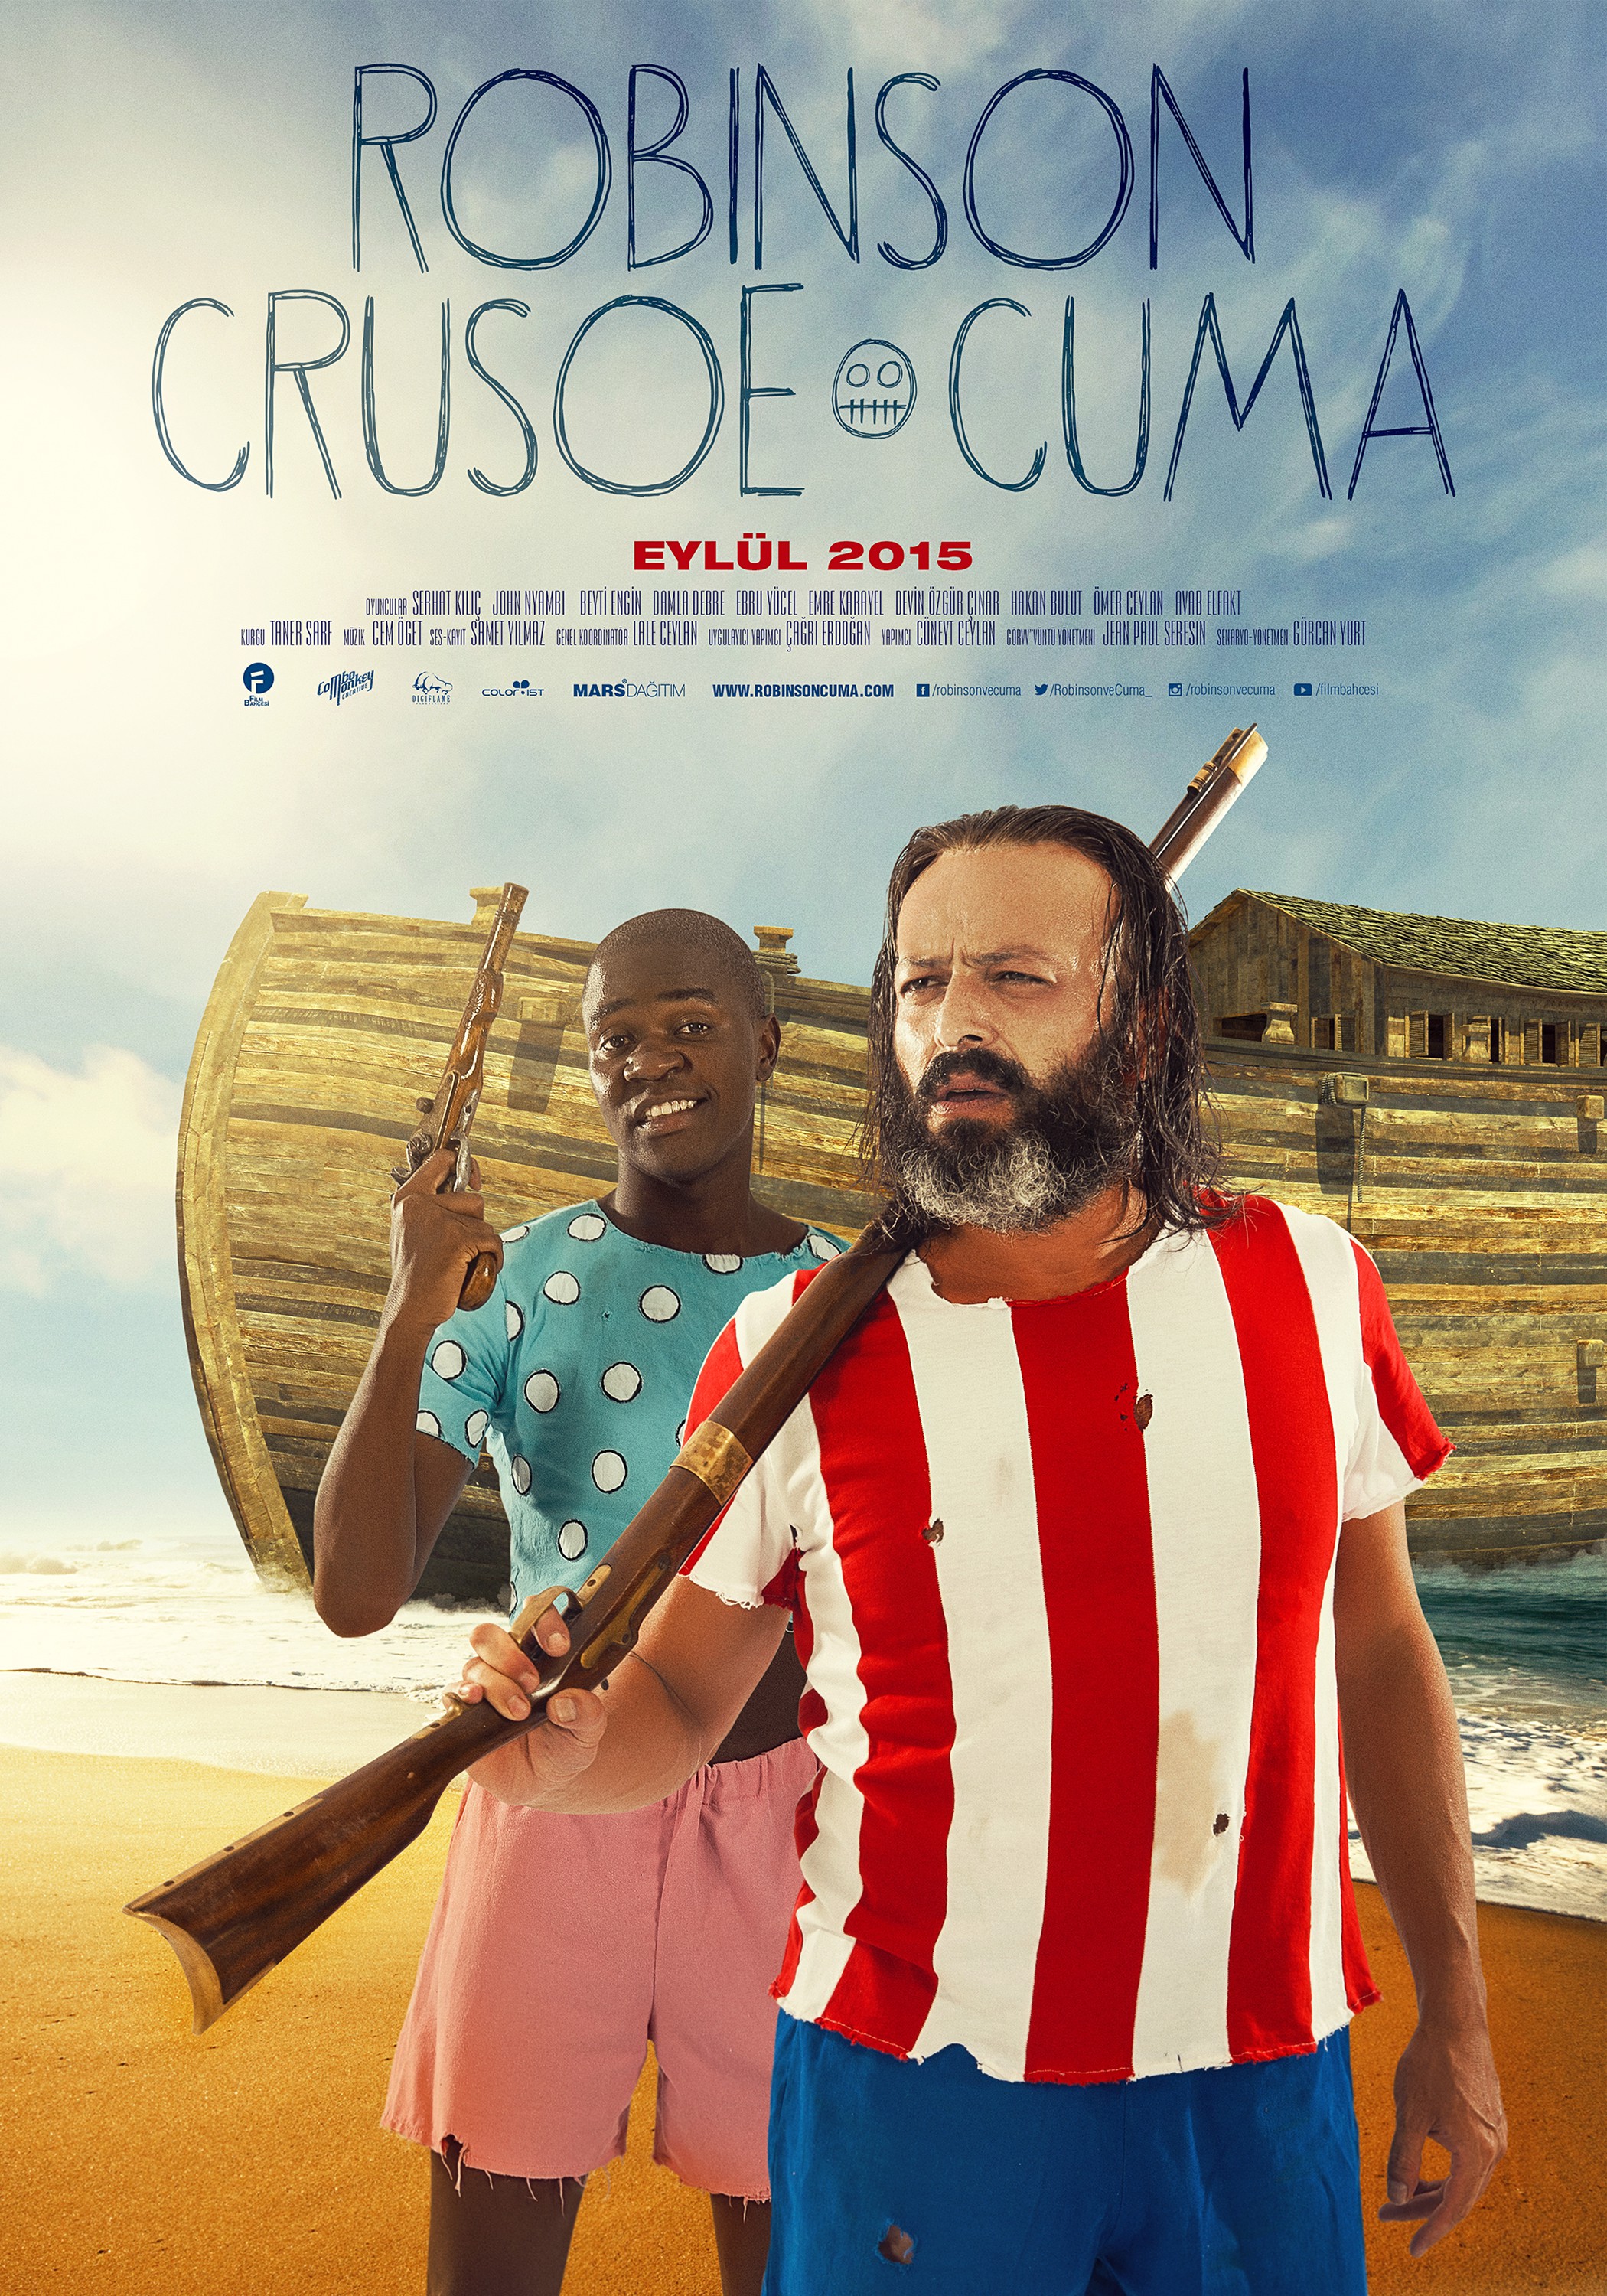 Mega Sized Movie Poster Image for Robinson Crusoe and Cuma (#5 of 5)